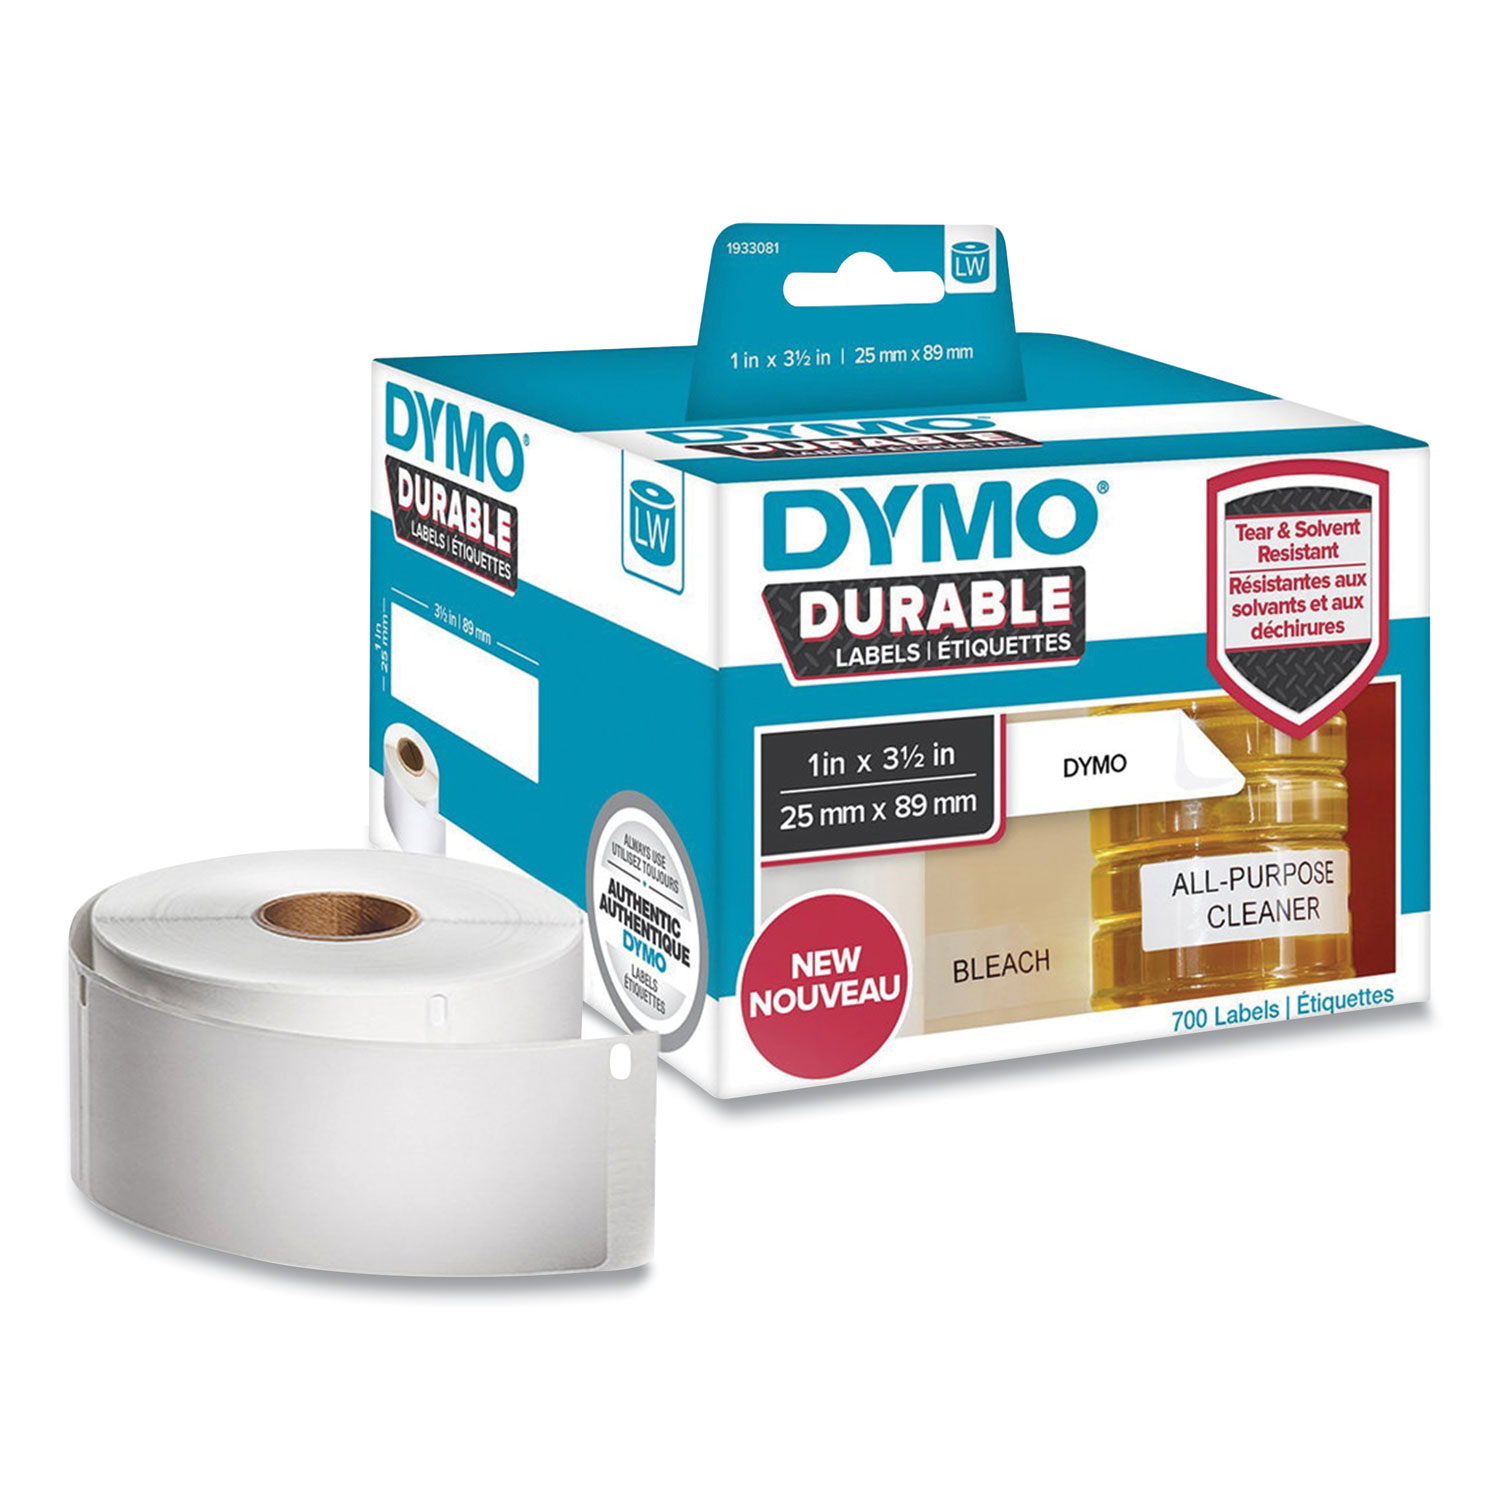  DYMO 1933081 LW Durable Multi-Purpose Labels, 1 x 3.5, White, 700/Roll (DYM24403839) 